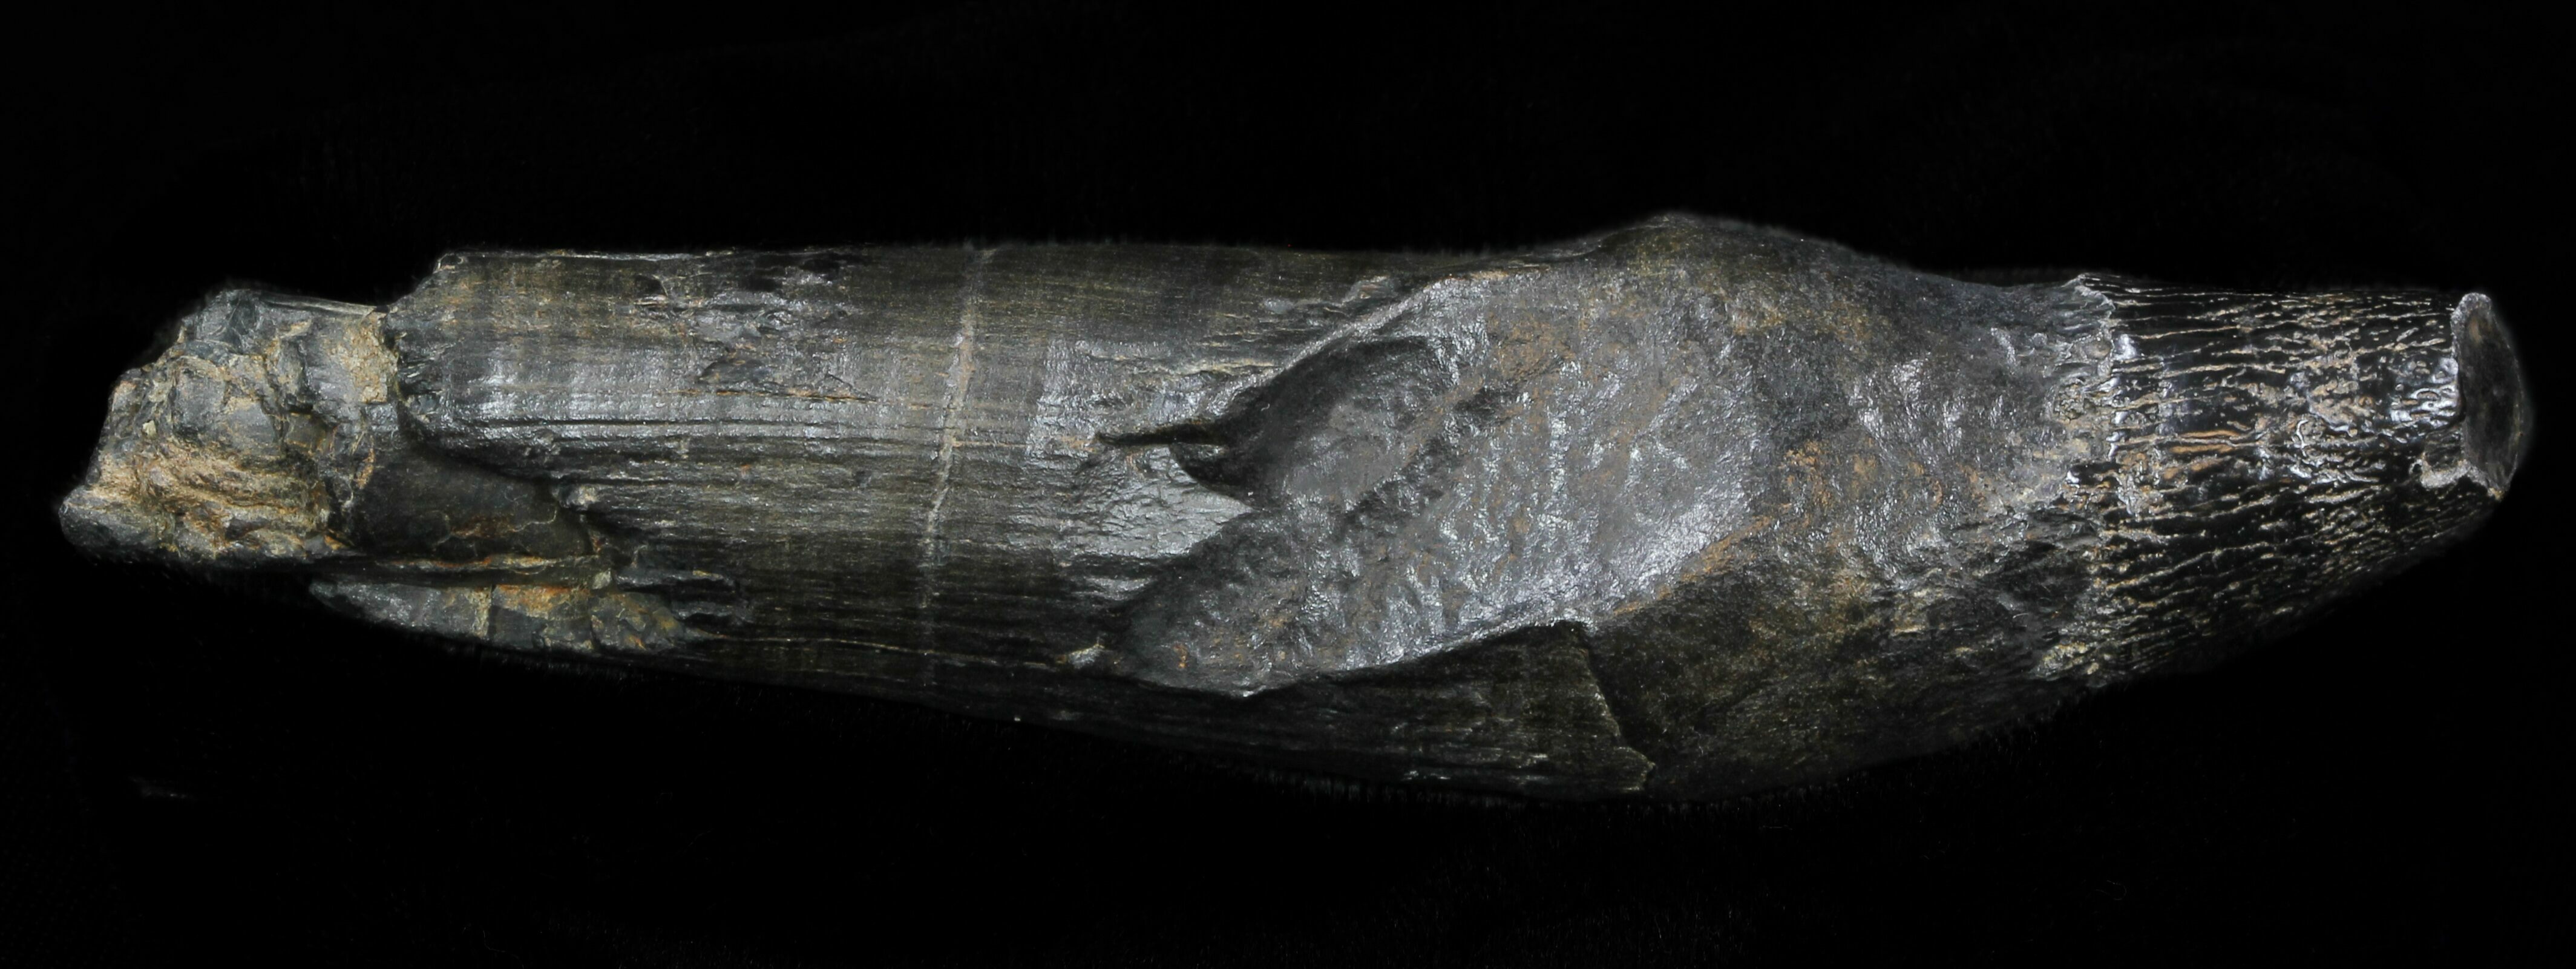 4.7" Fossil Whale Tooth - South Carolina For Sale (#33019) - FossilEra.com